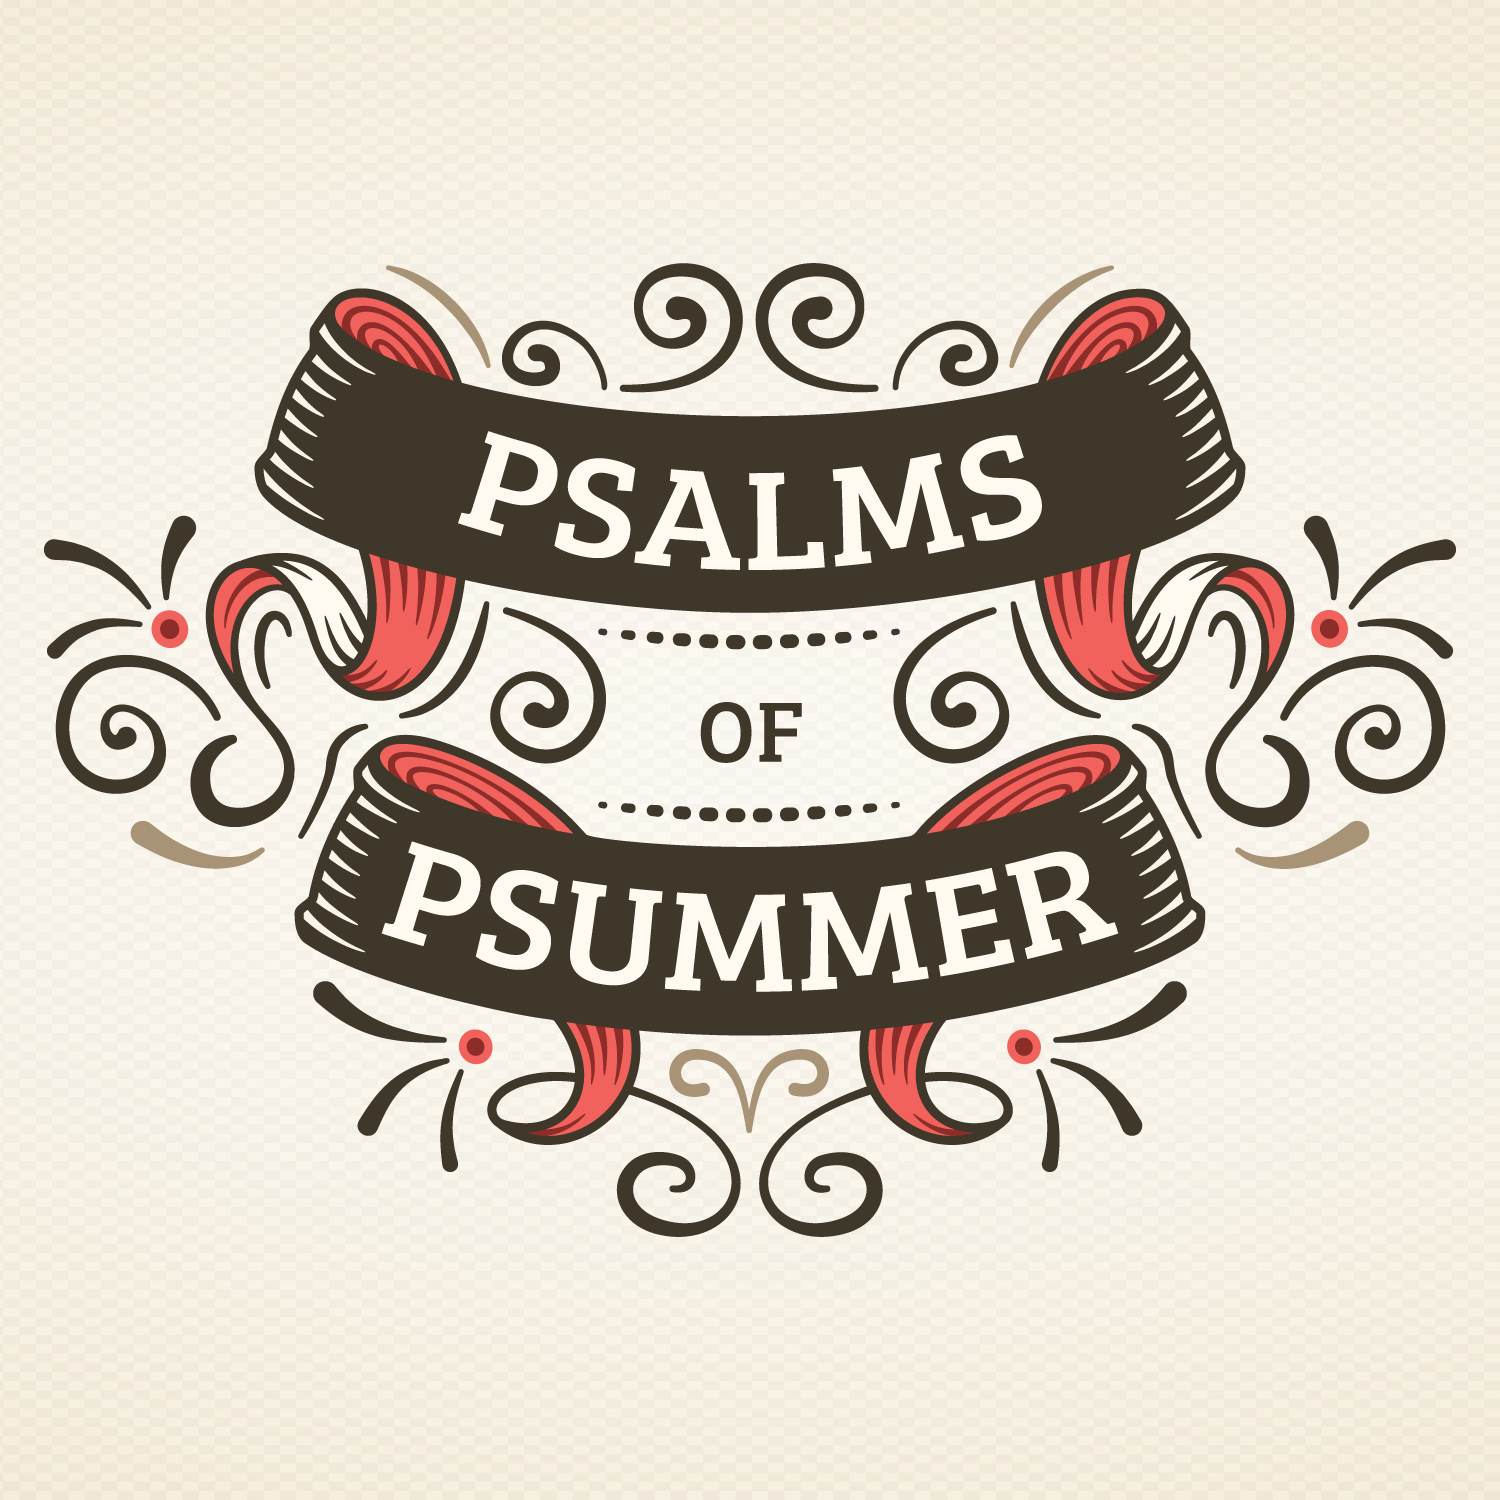  Psalms of Psummer: Live it Out (Psalm 15)